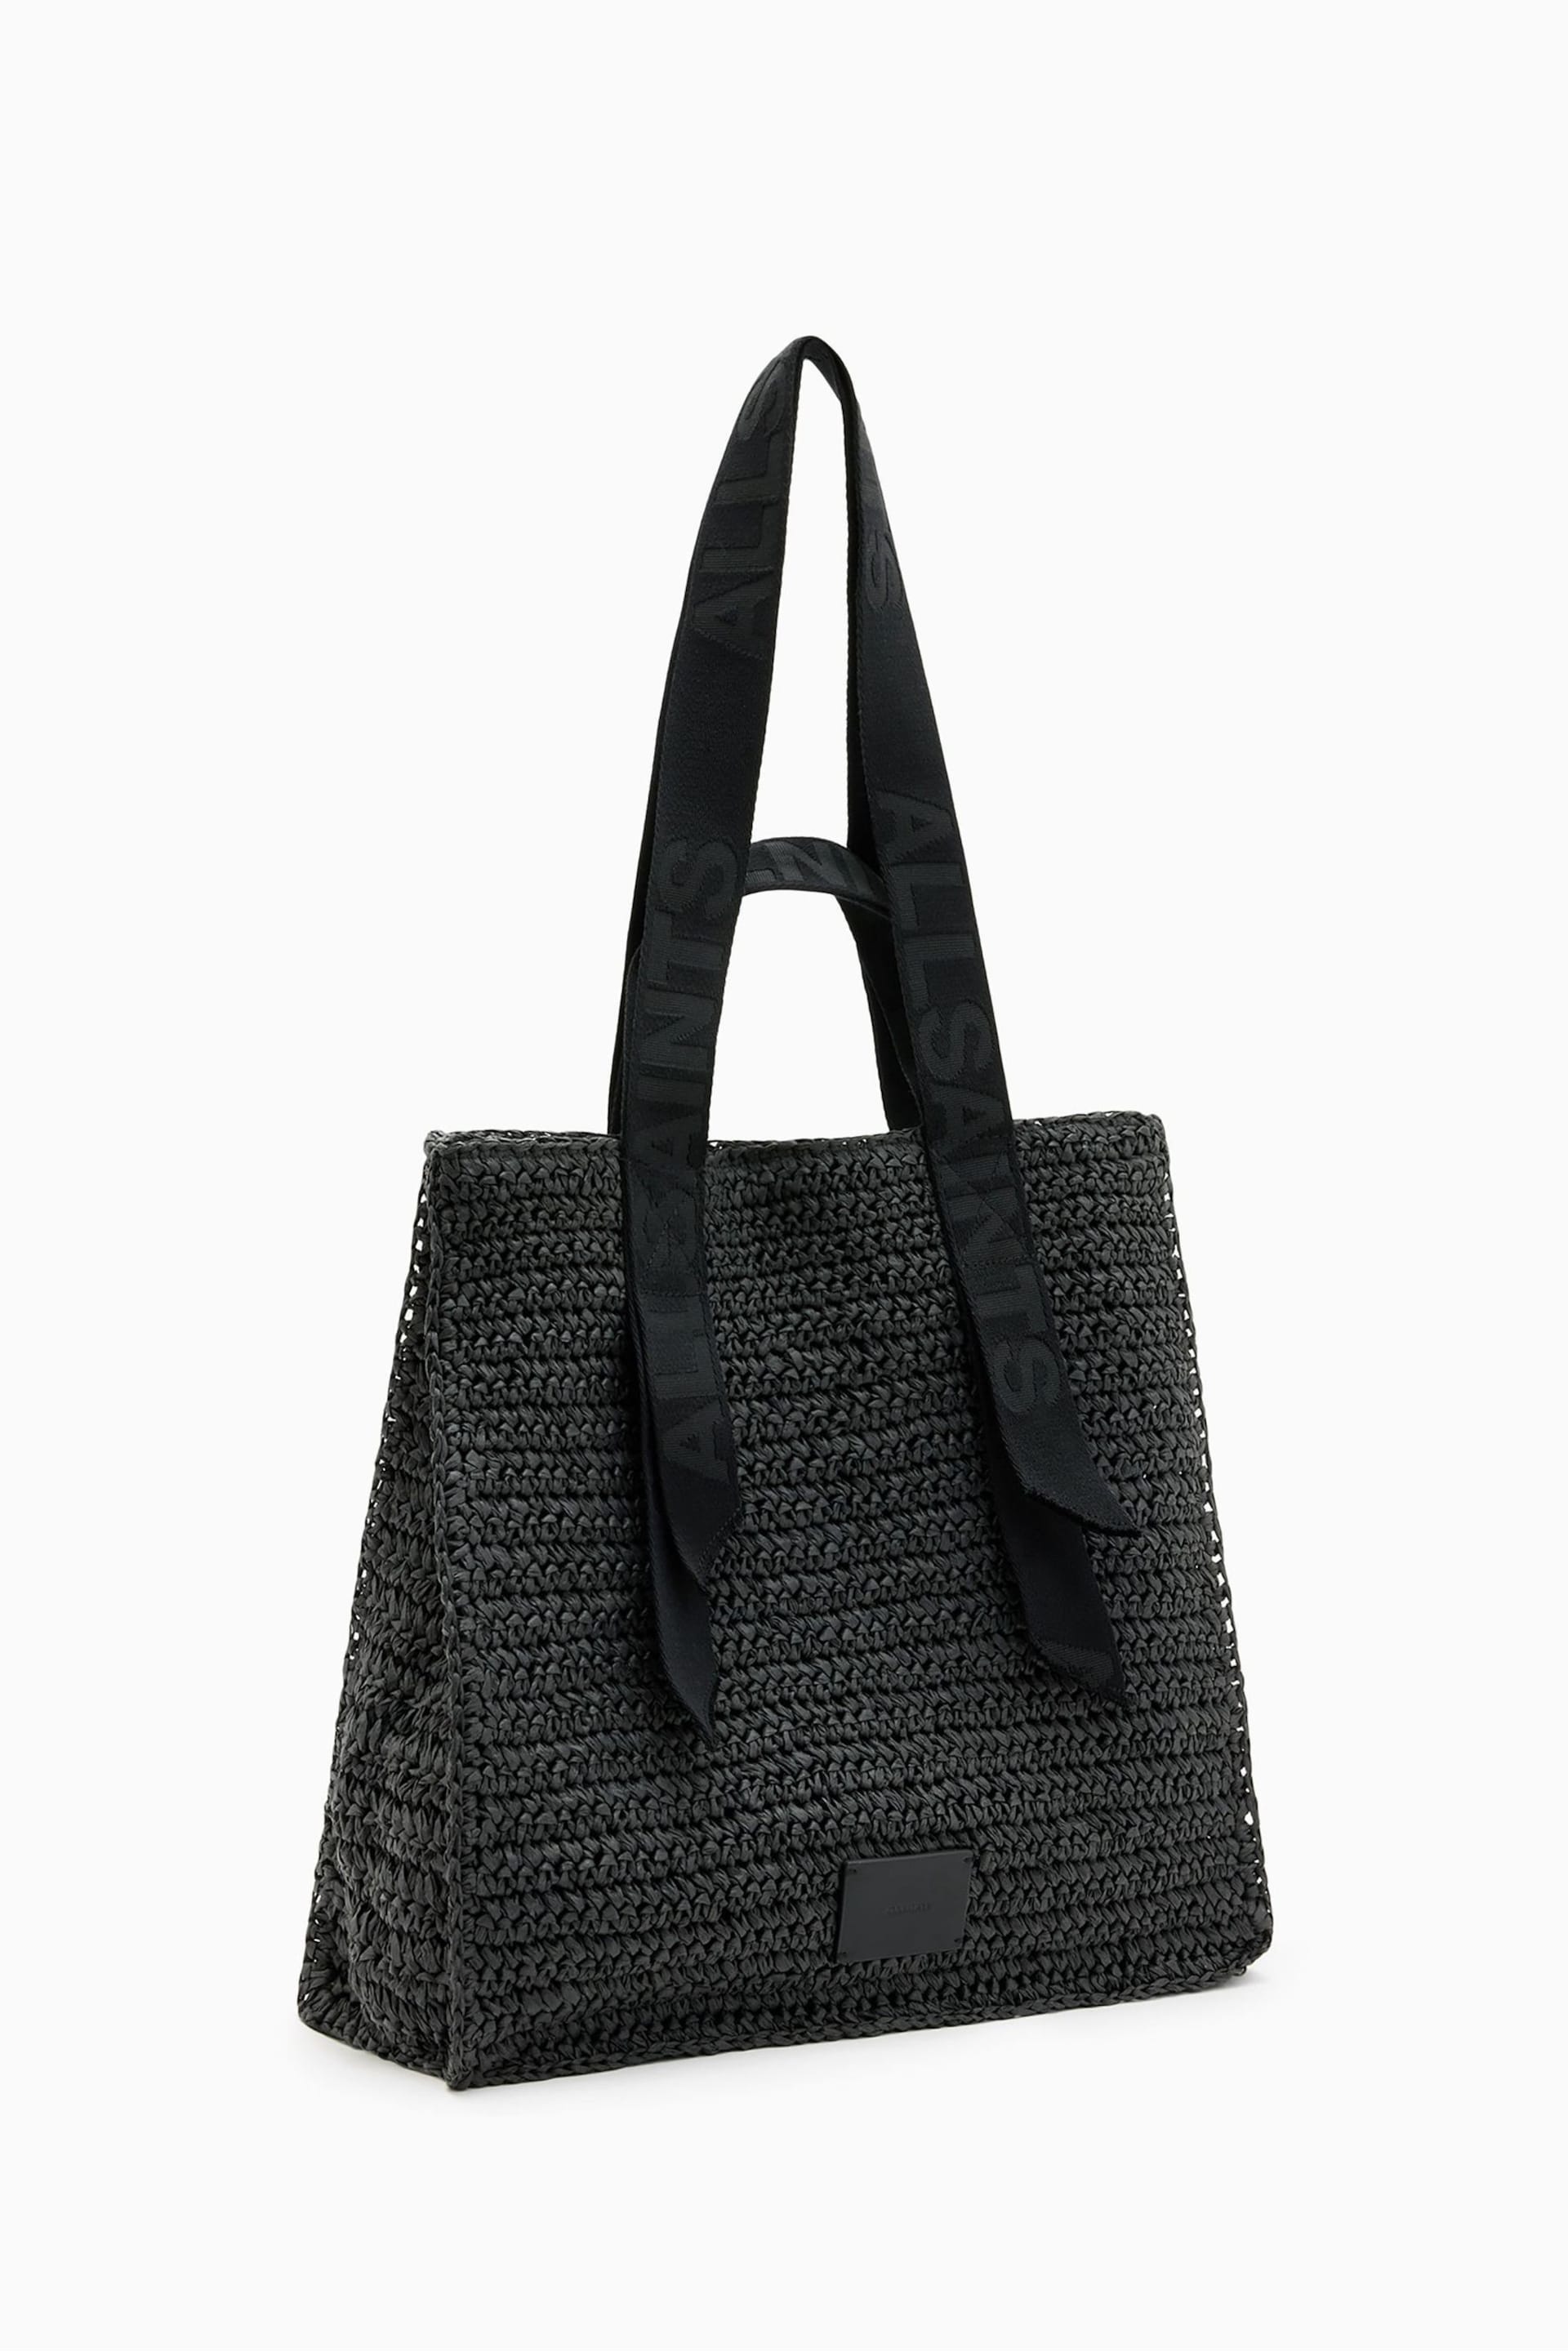 AllSaints Black Lullah N/S Tote Bag - Image 4 of 7